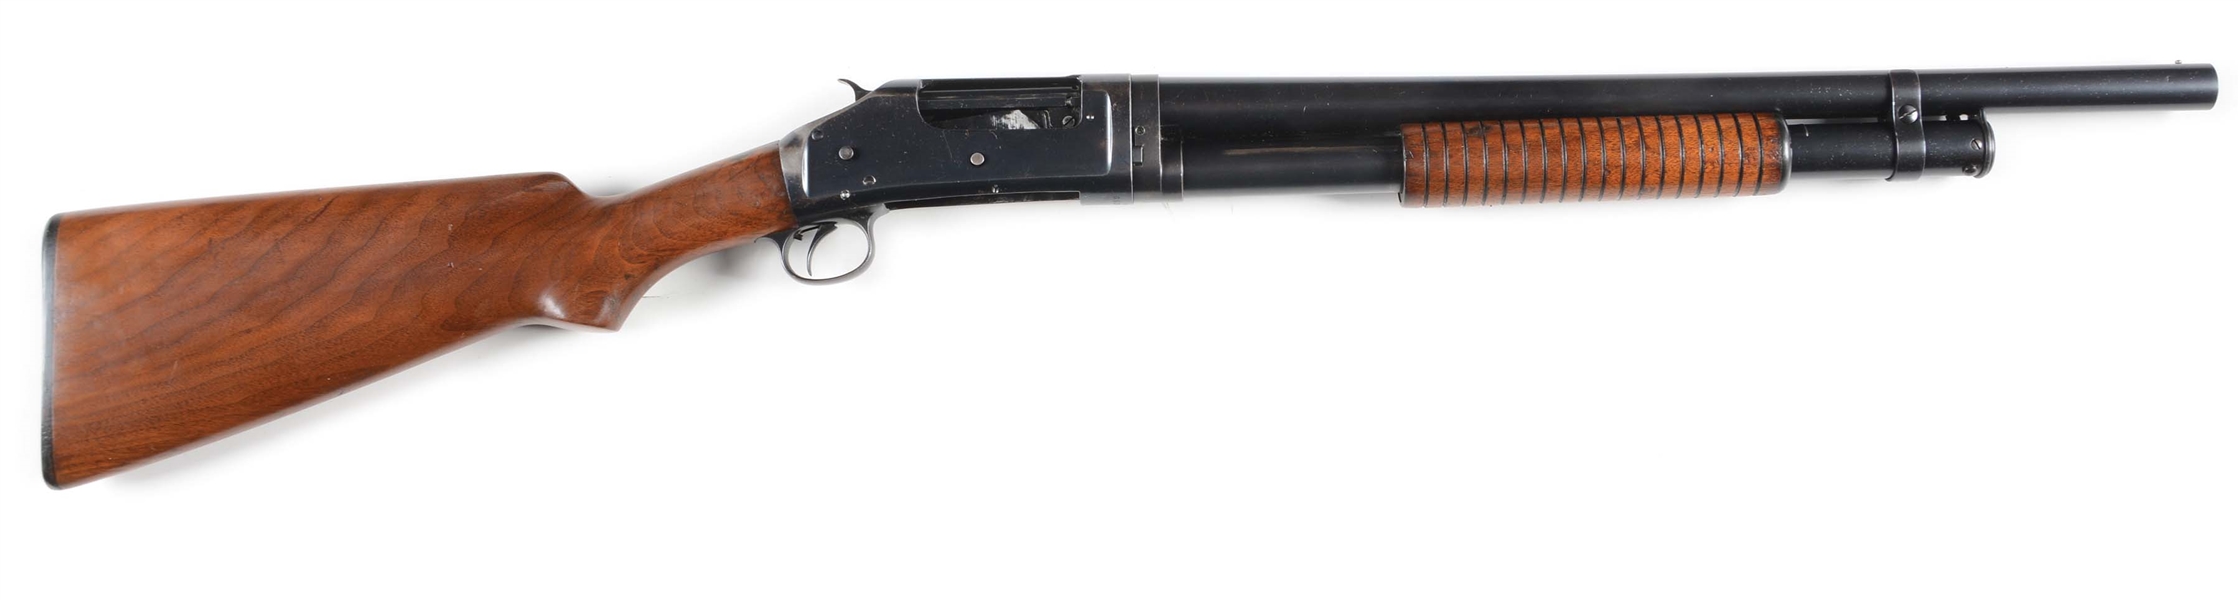 (C) US WINCHESTER MODEL 1897 PUMP ACTION RIOT GUN (1919).